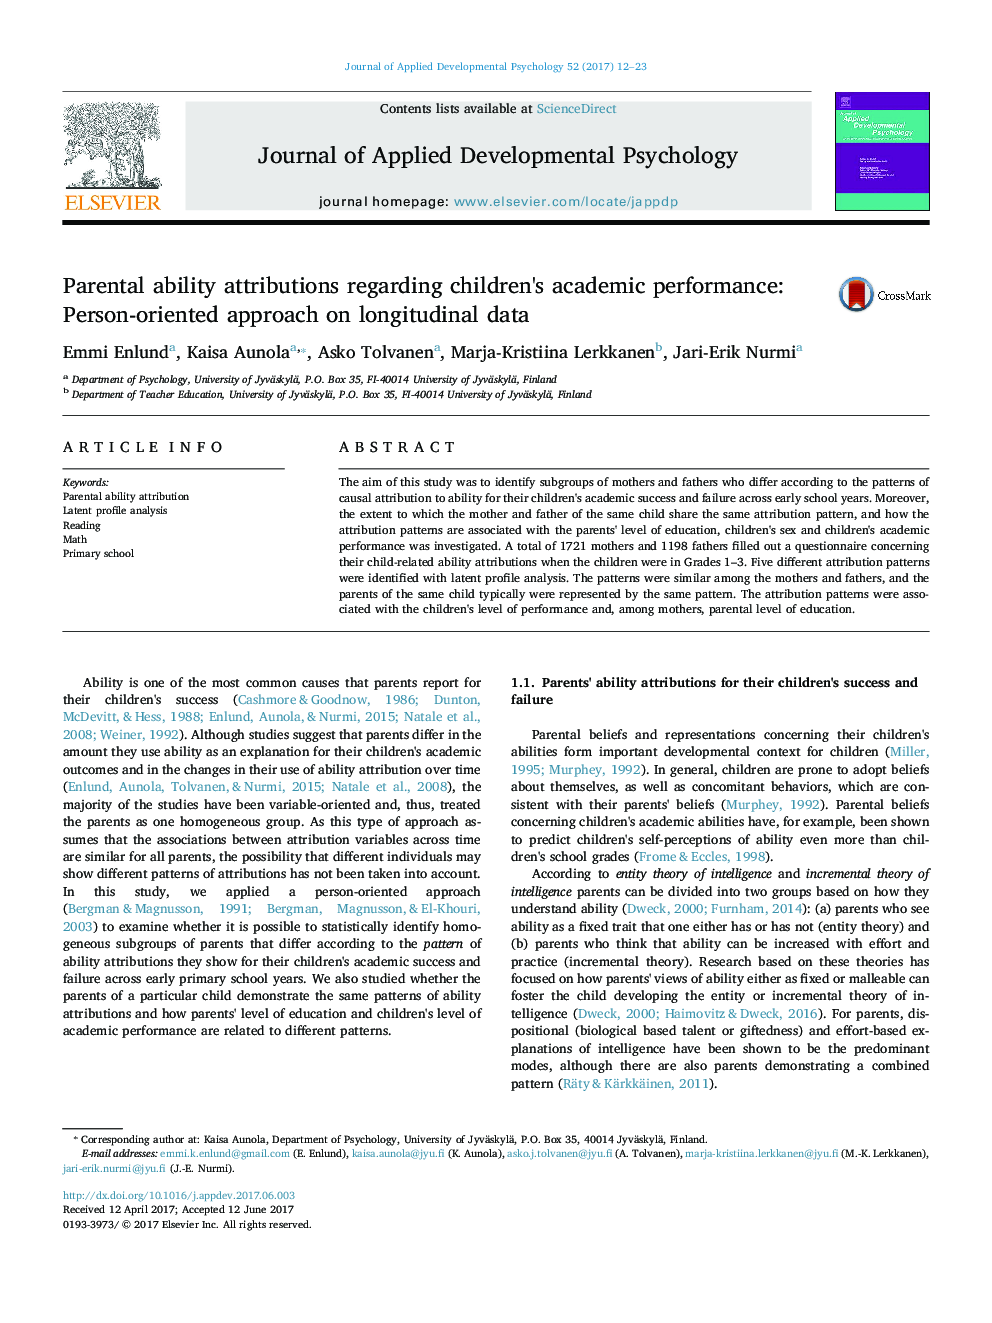 Parental ability attributions regarding children's academic performance: Person-oriented approach on longitudinal data